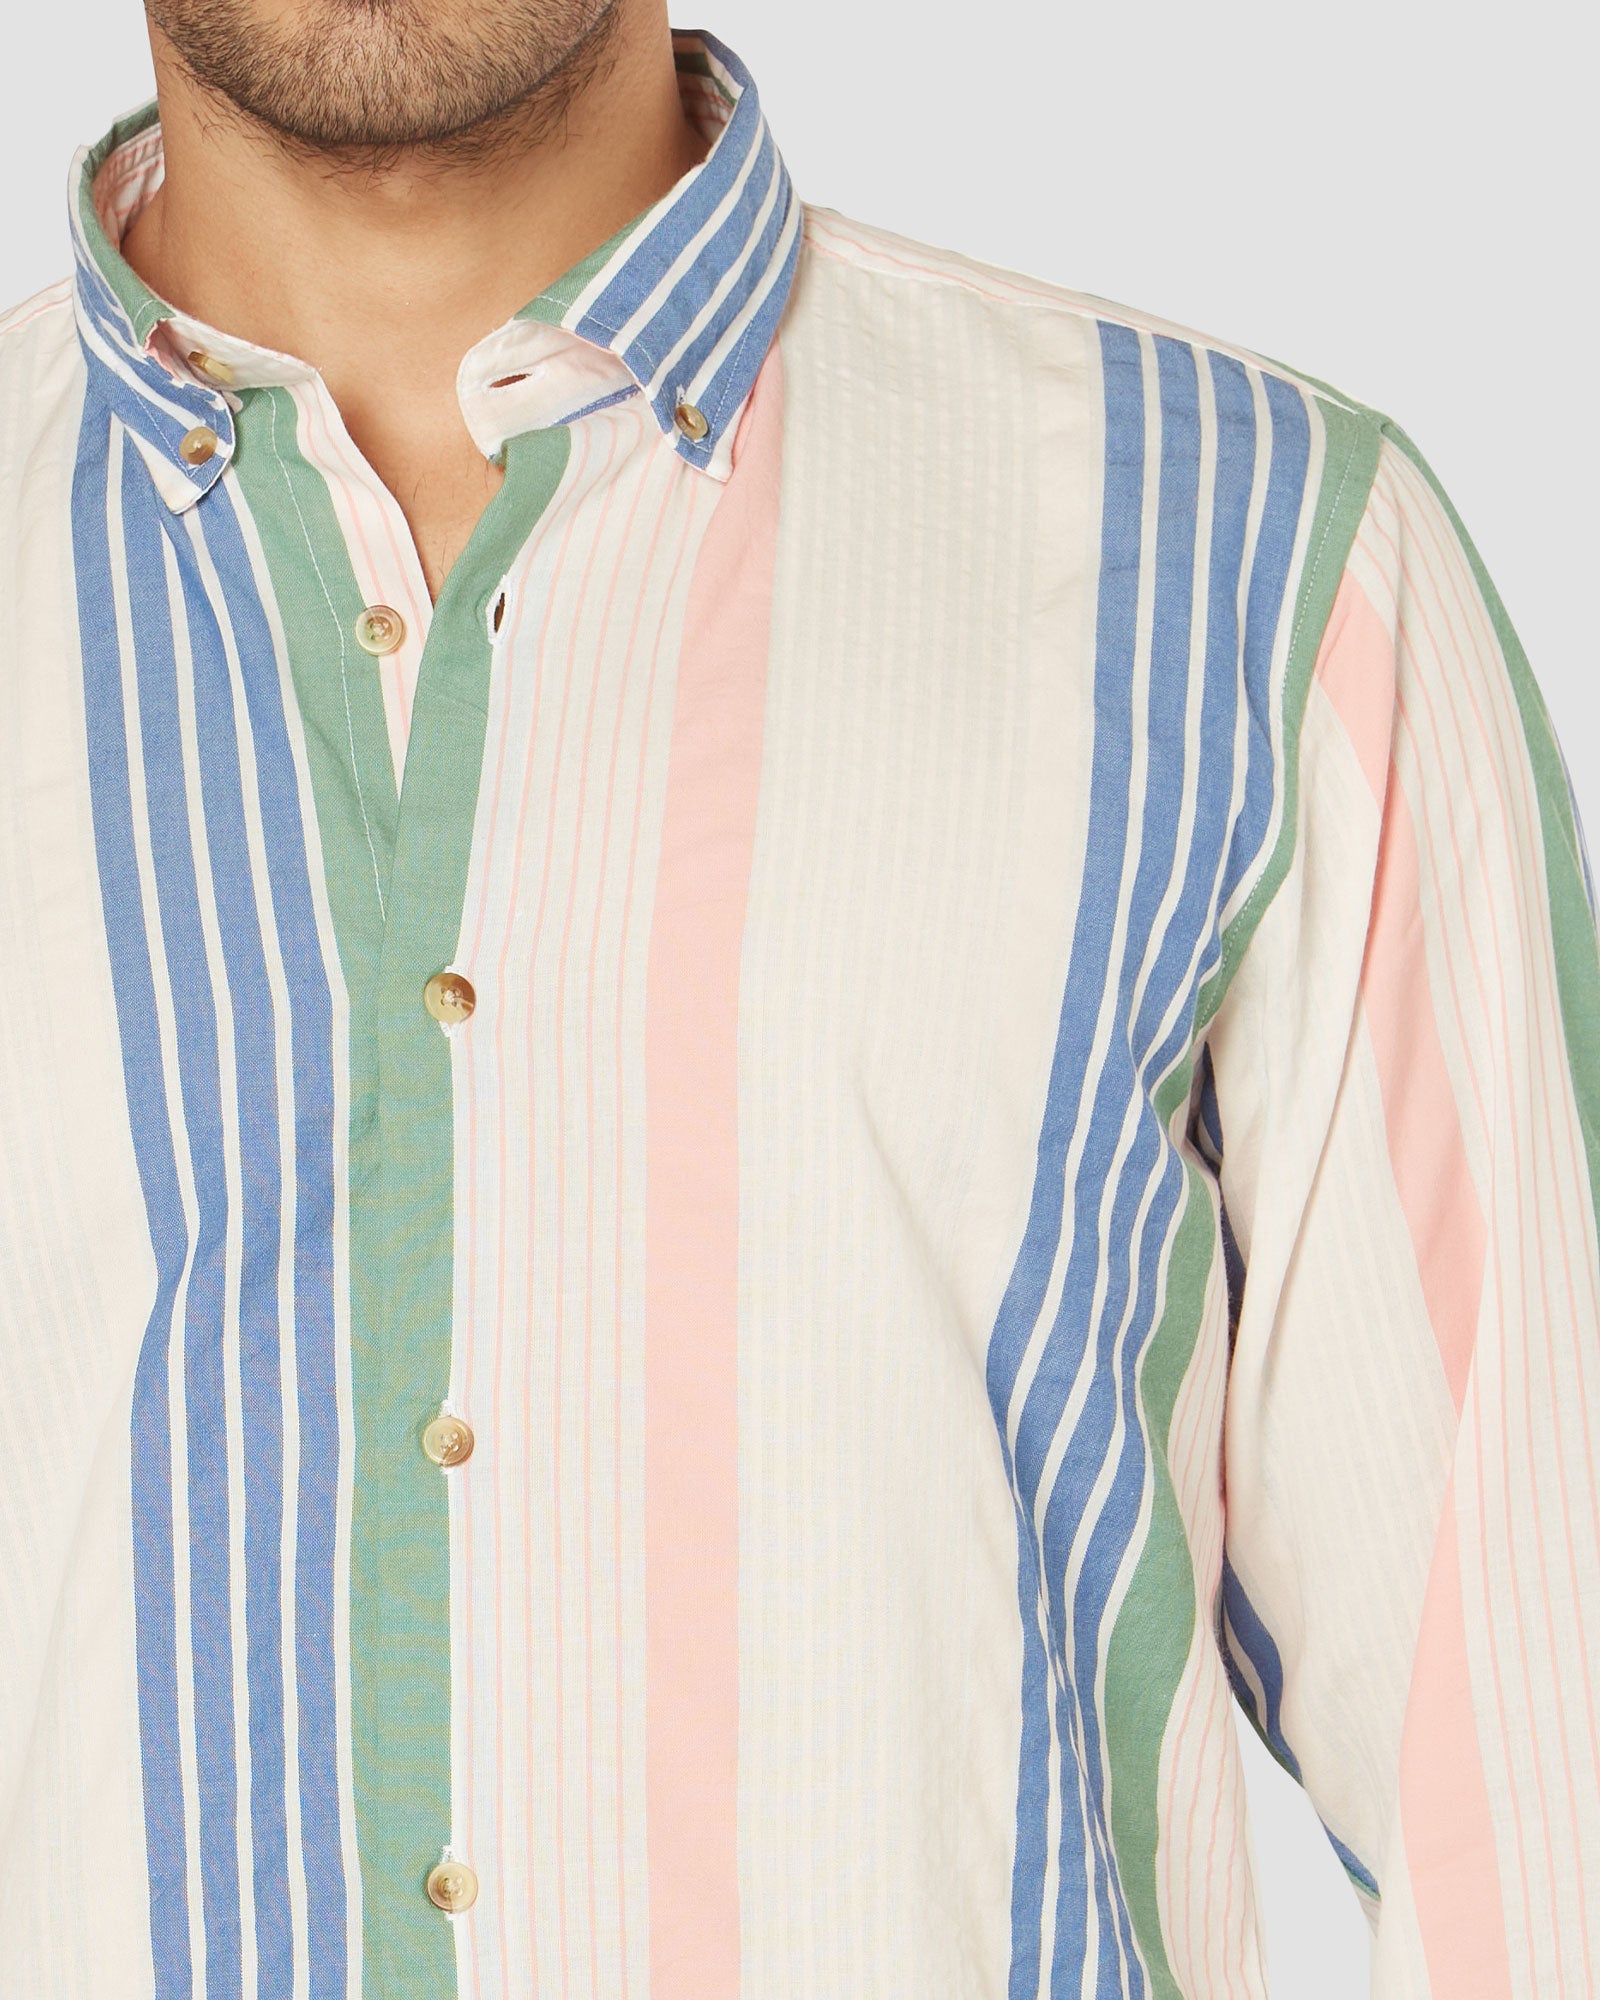 Bombay Shirt Company - Free Petunia Striped Shirt